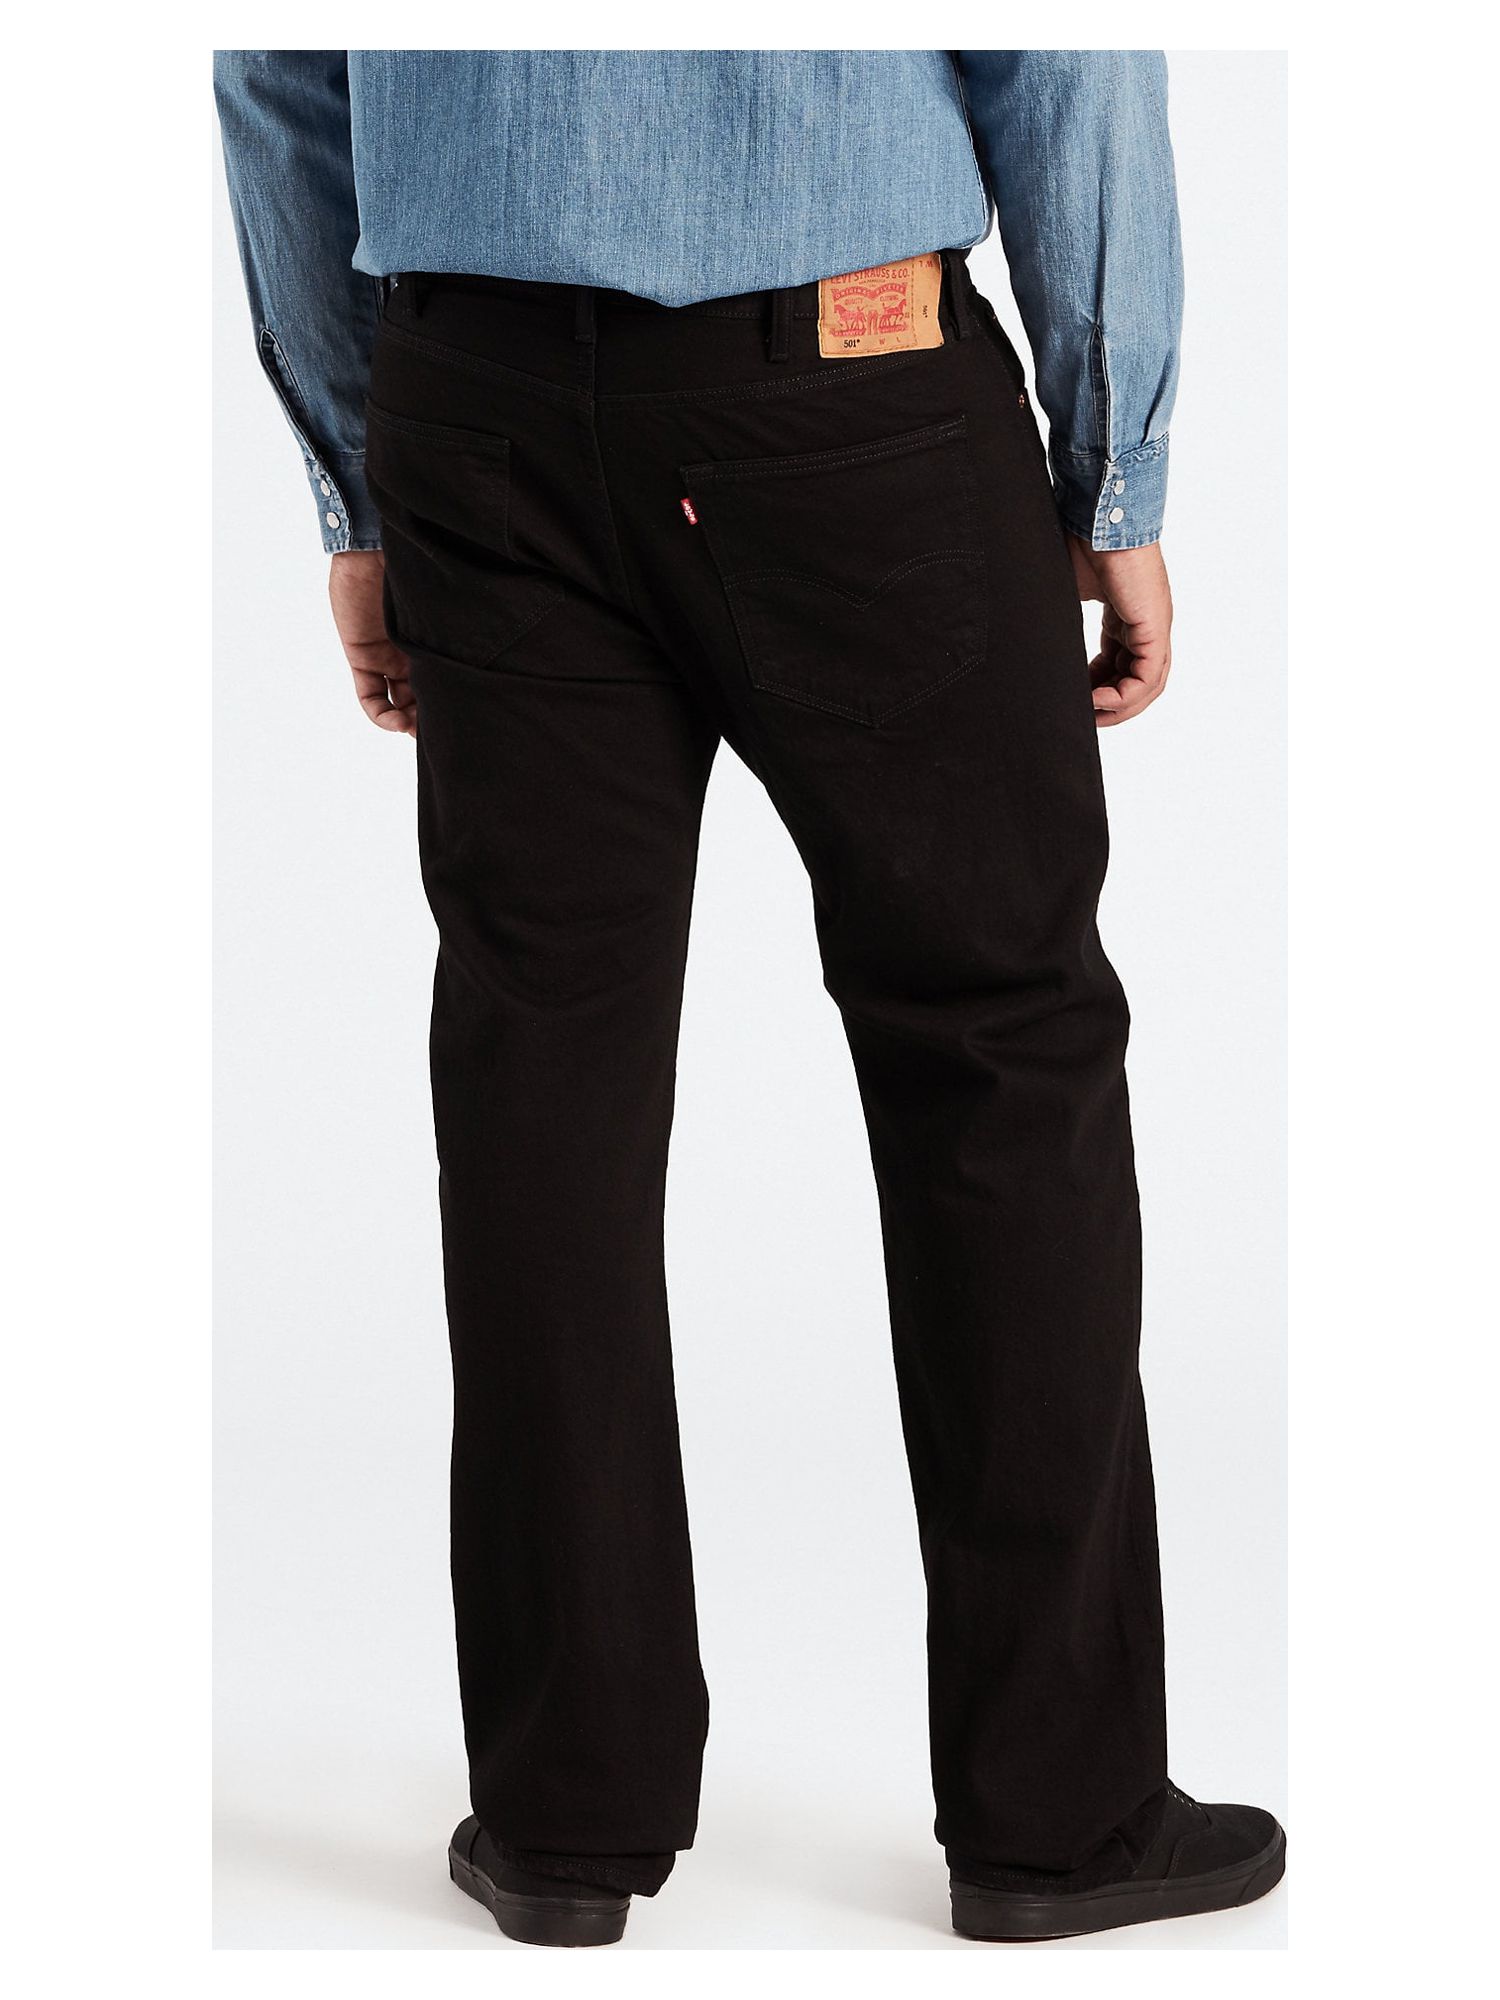 Levi's Men's Big & Tall 501 Original Fit Jeans - image 4 of 8